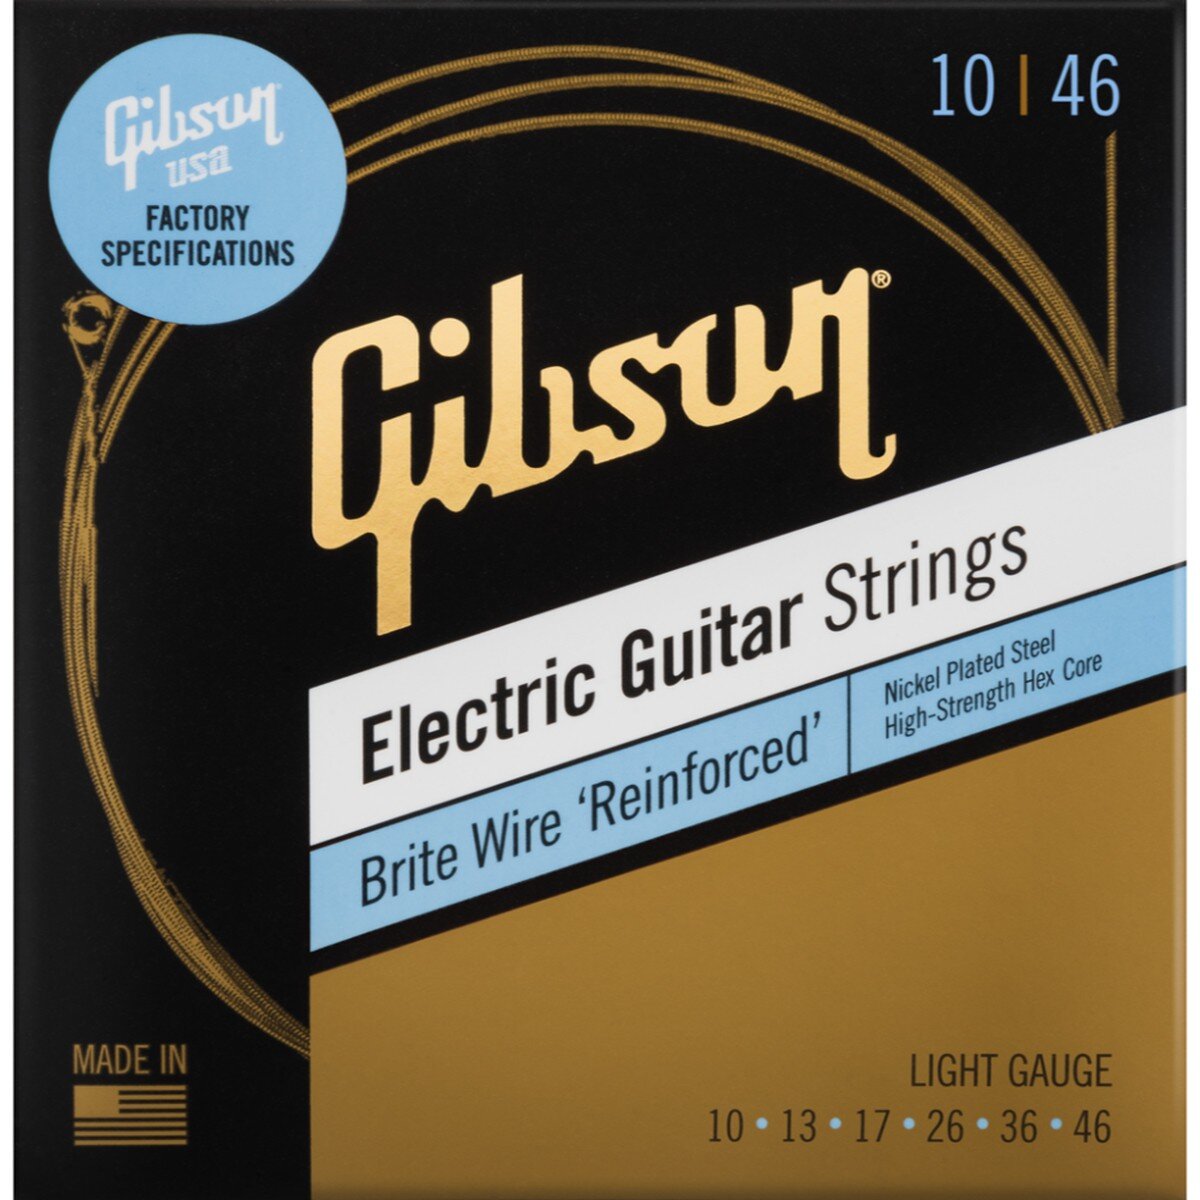 Gibson Brite Wire Reinforced - 10-046 : photo 1